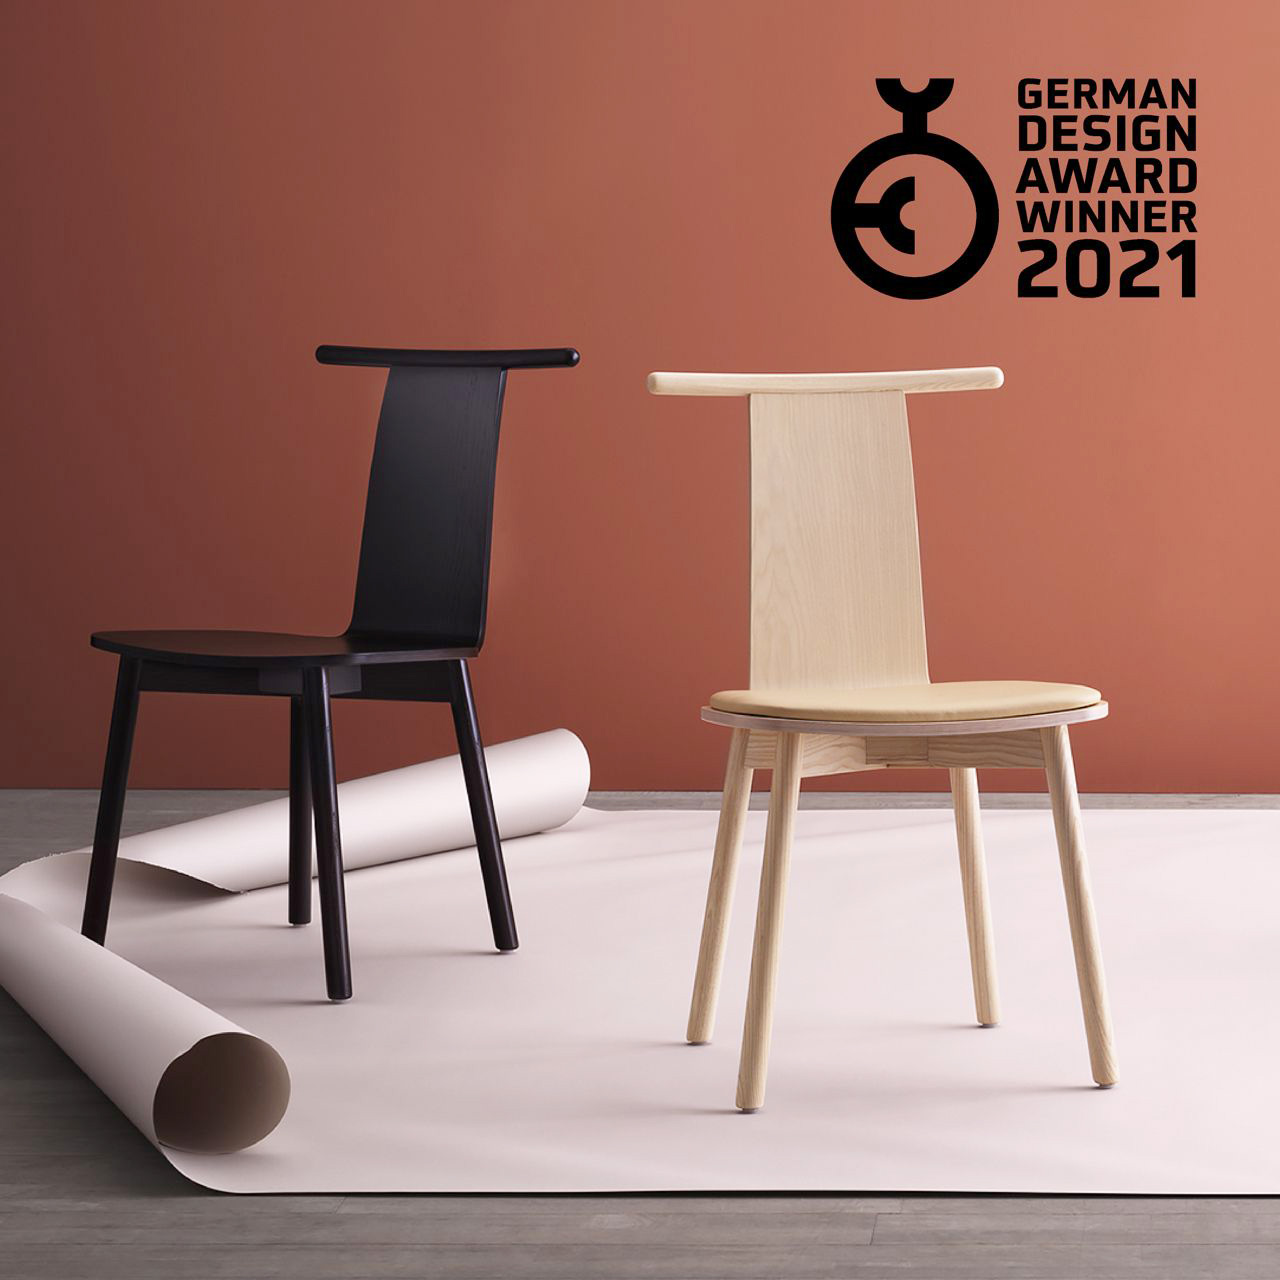 German Design